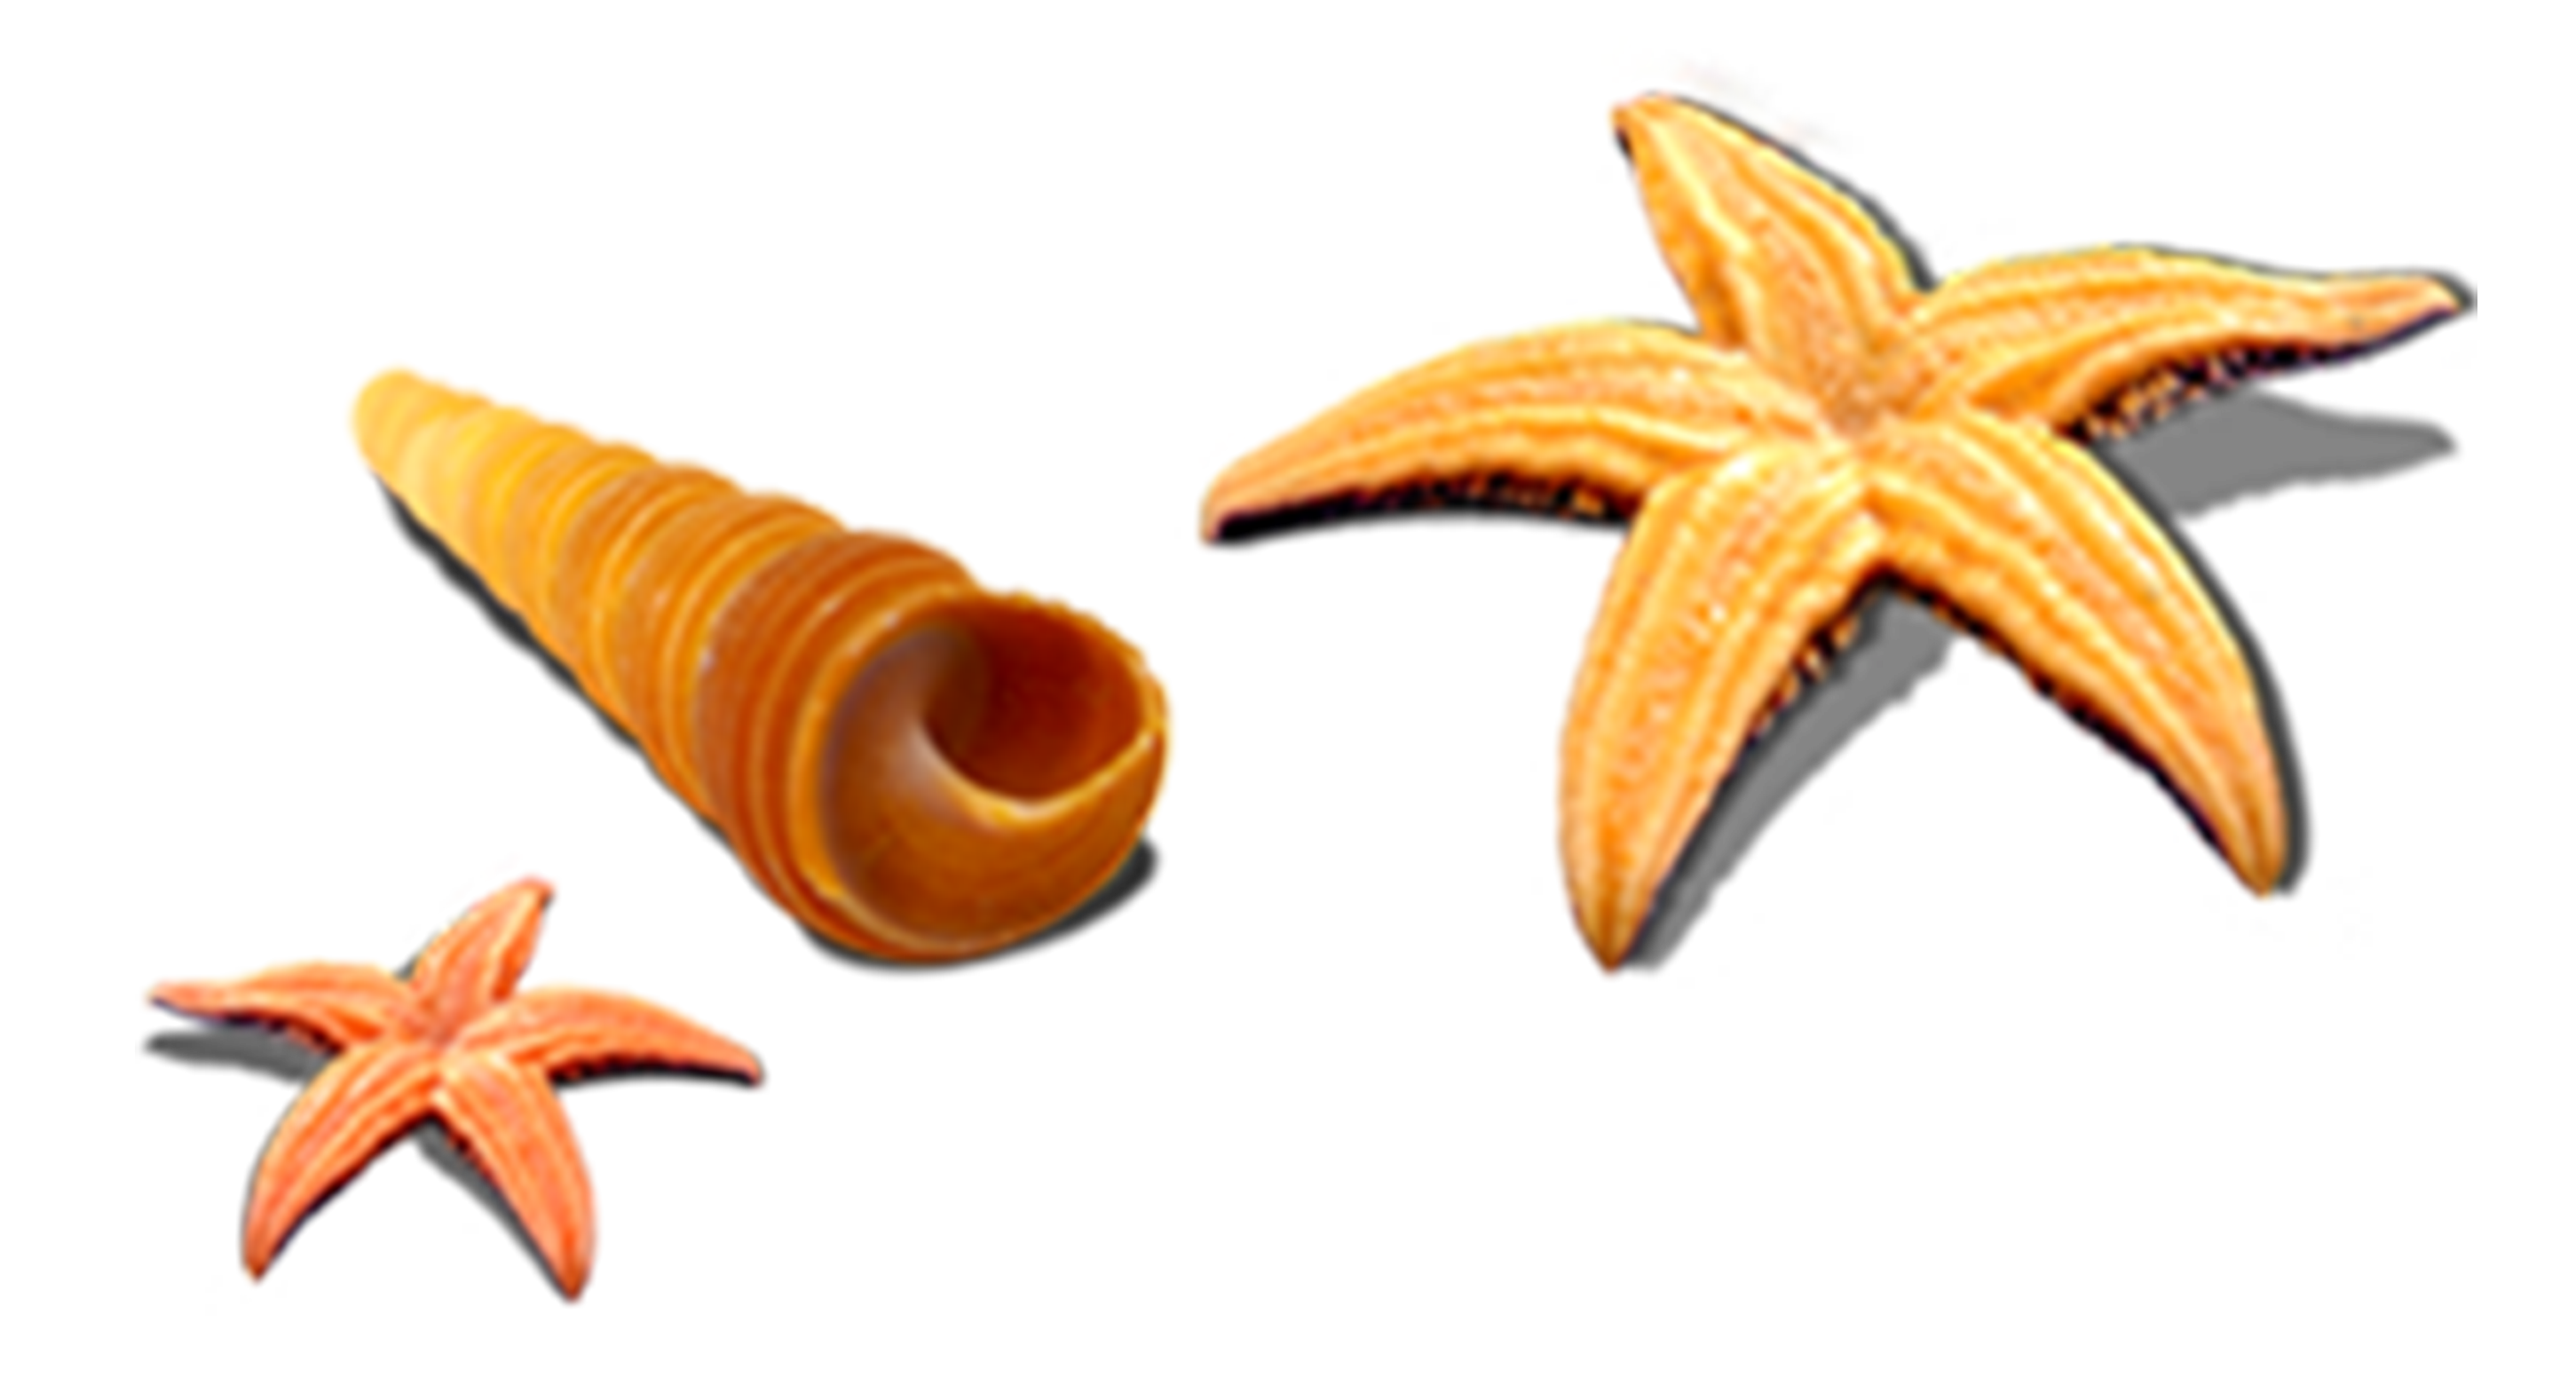 starfish clipart object